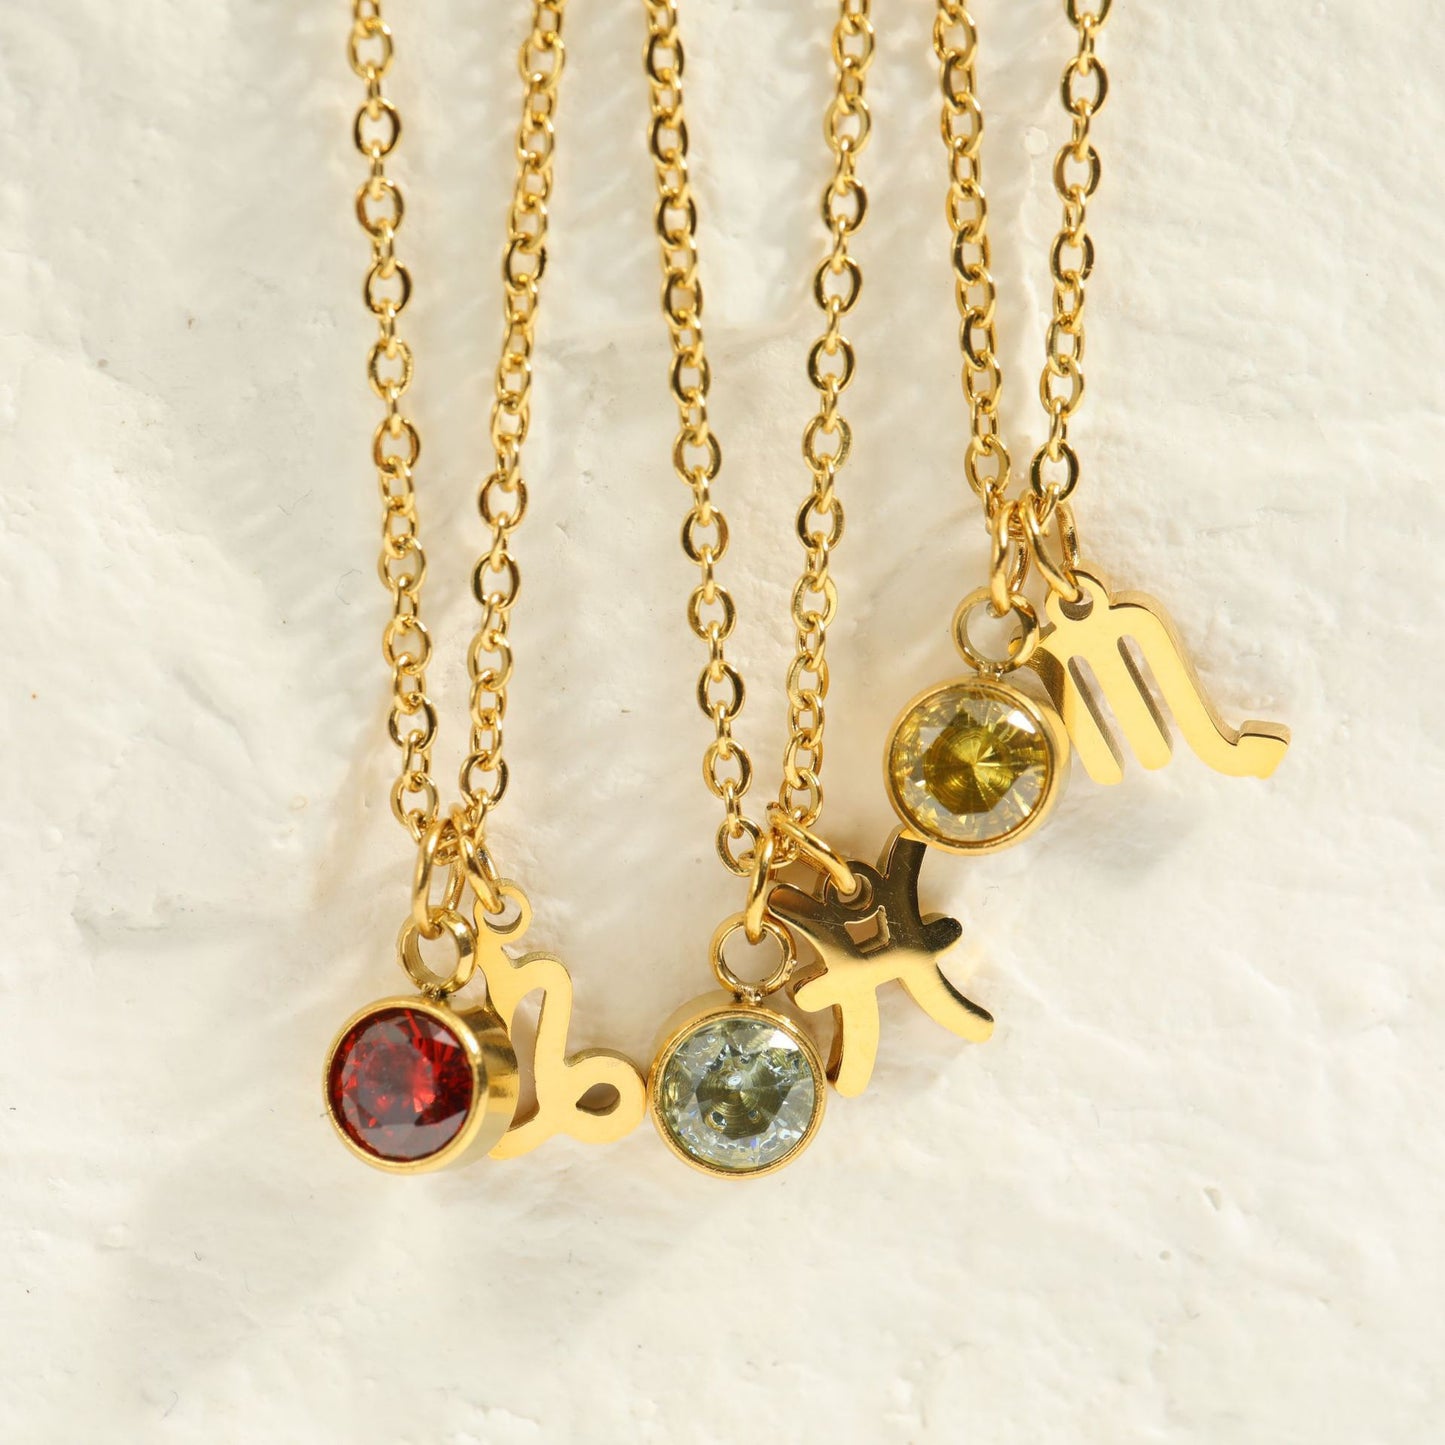 Zodiac Pendant Necklace with birthstone